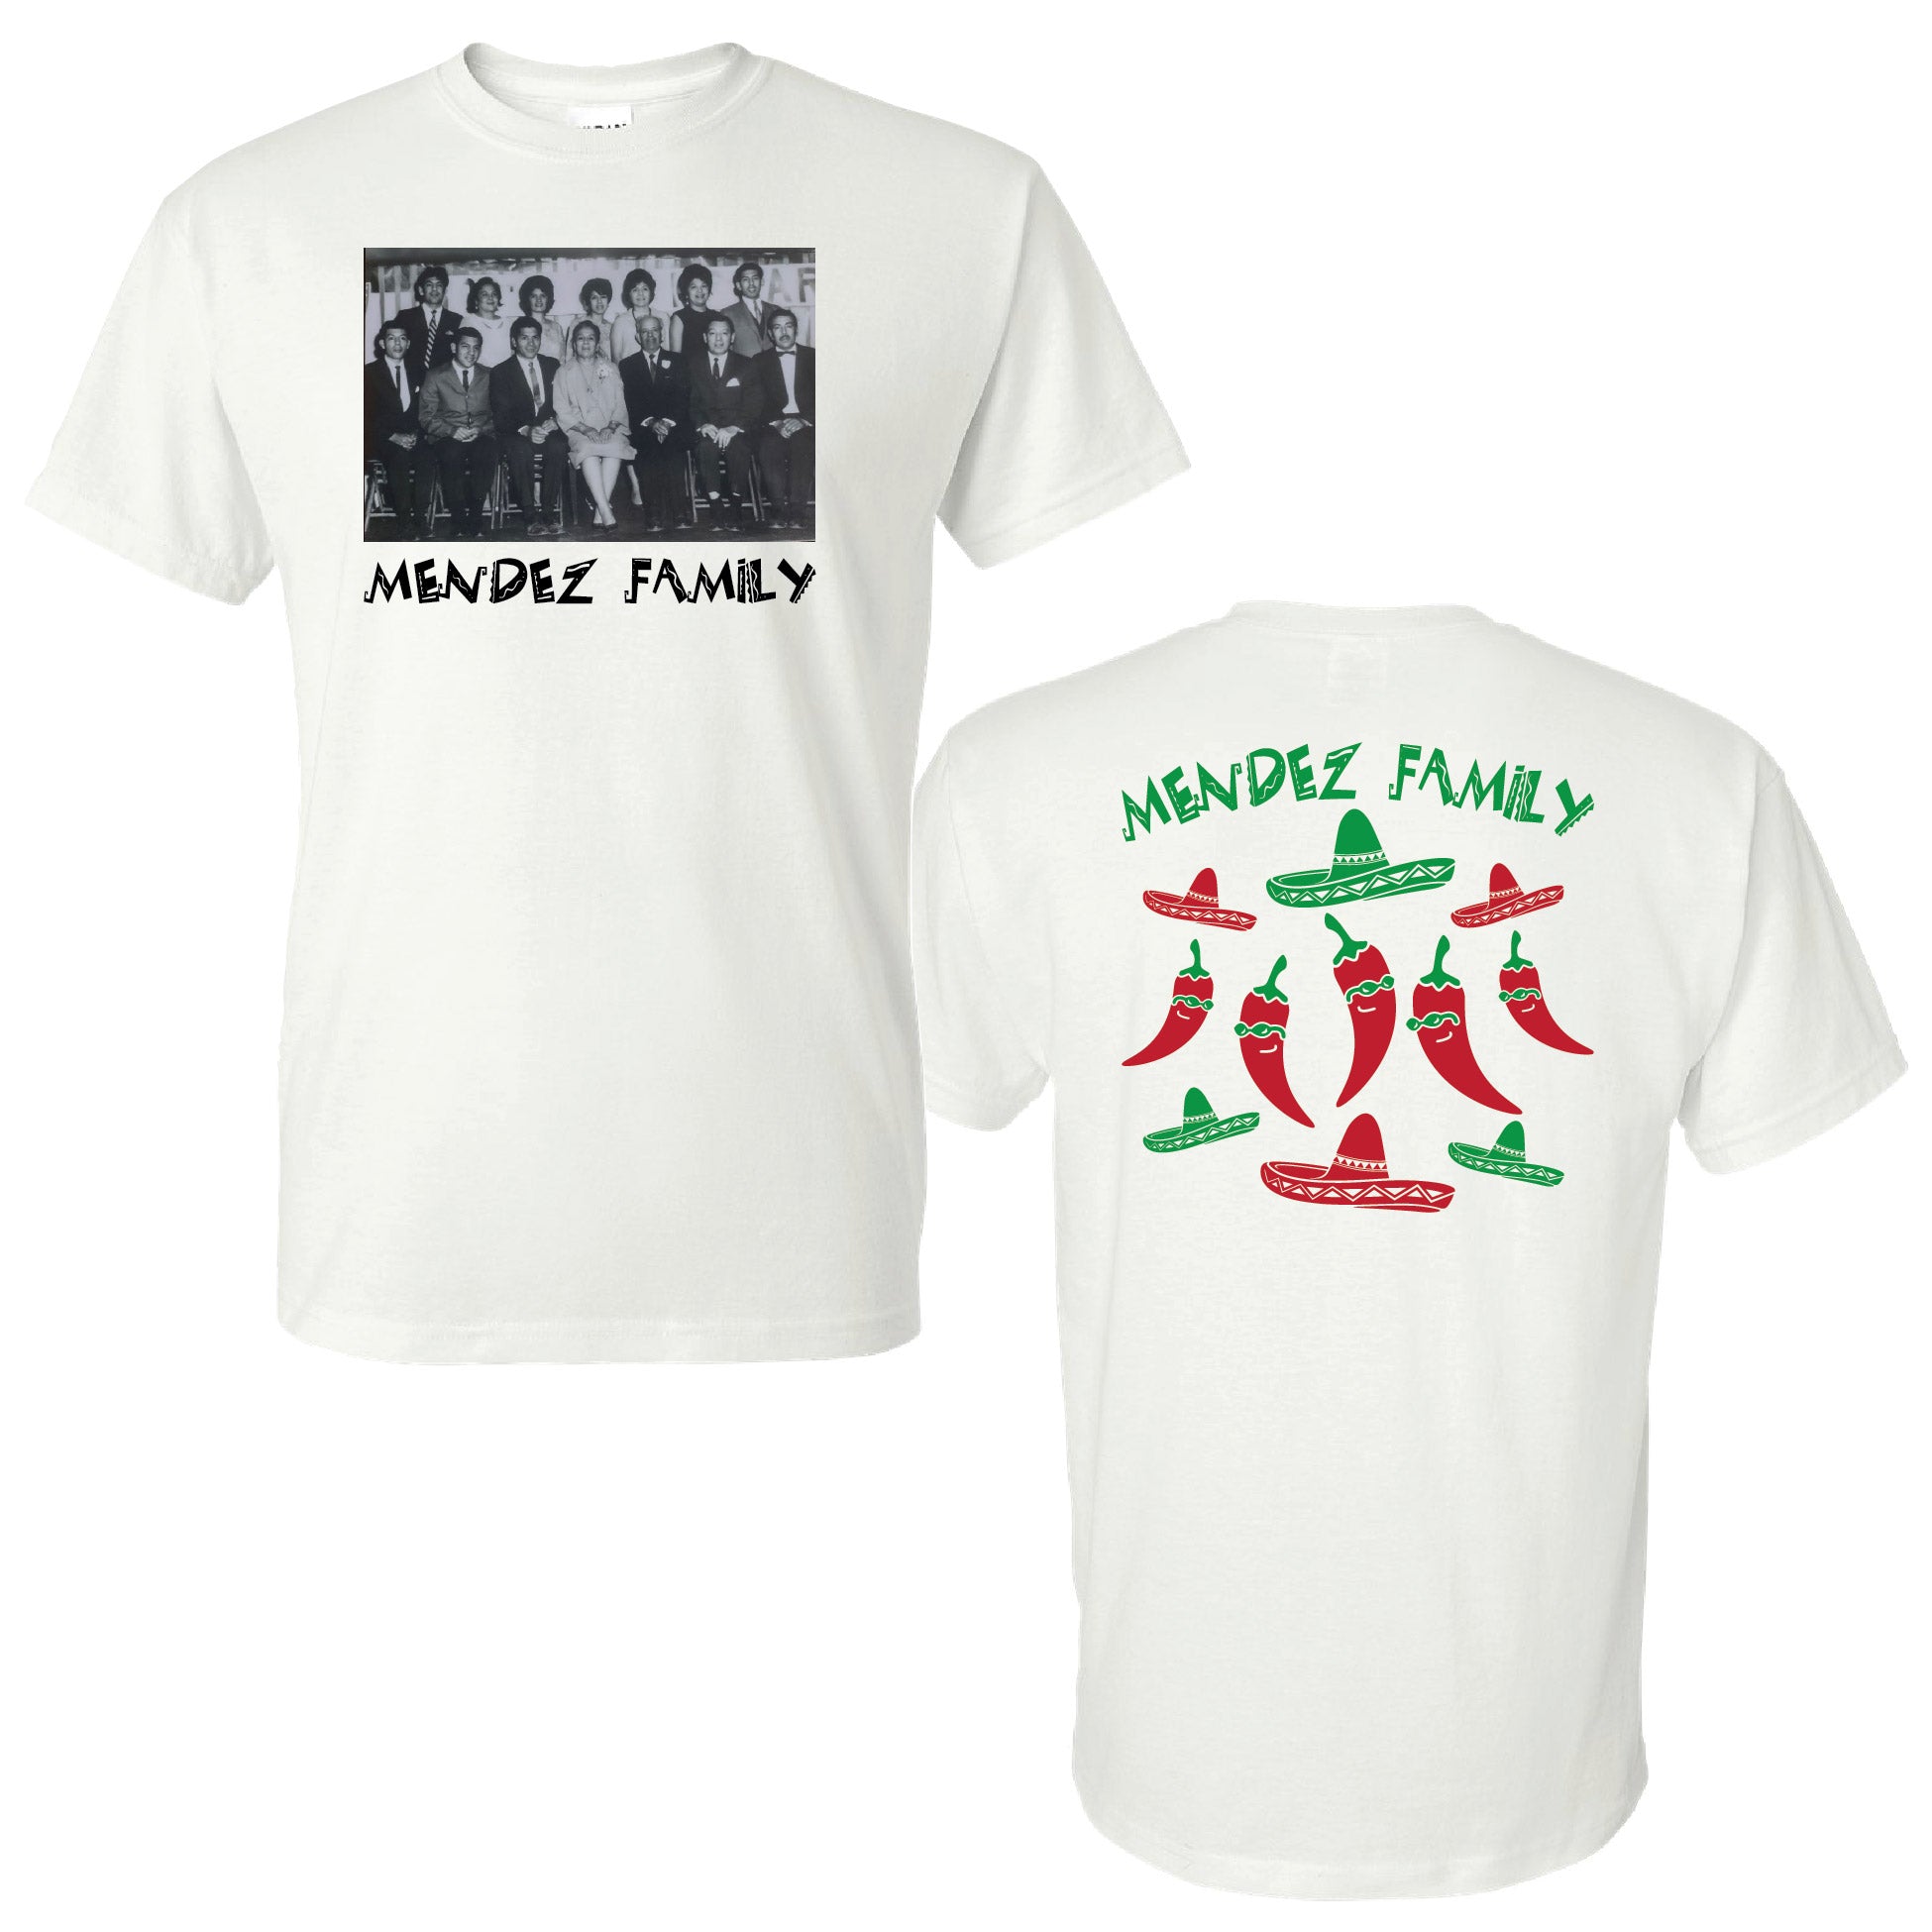 Mendez Family T-Shirt